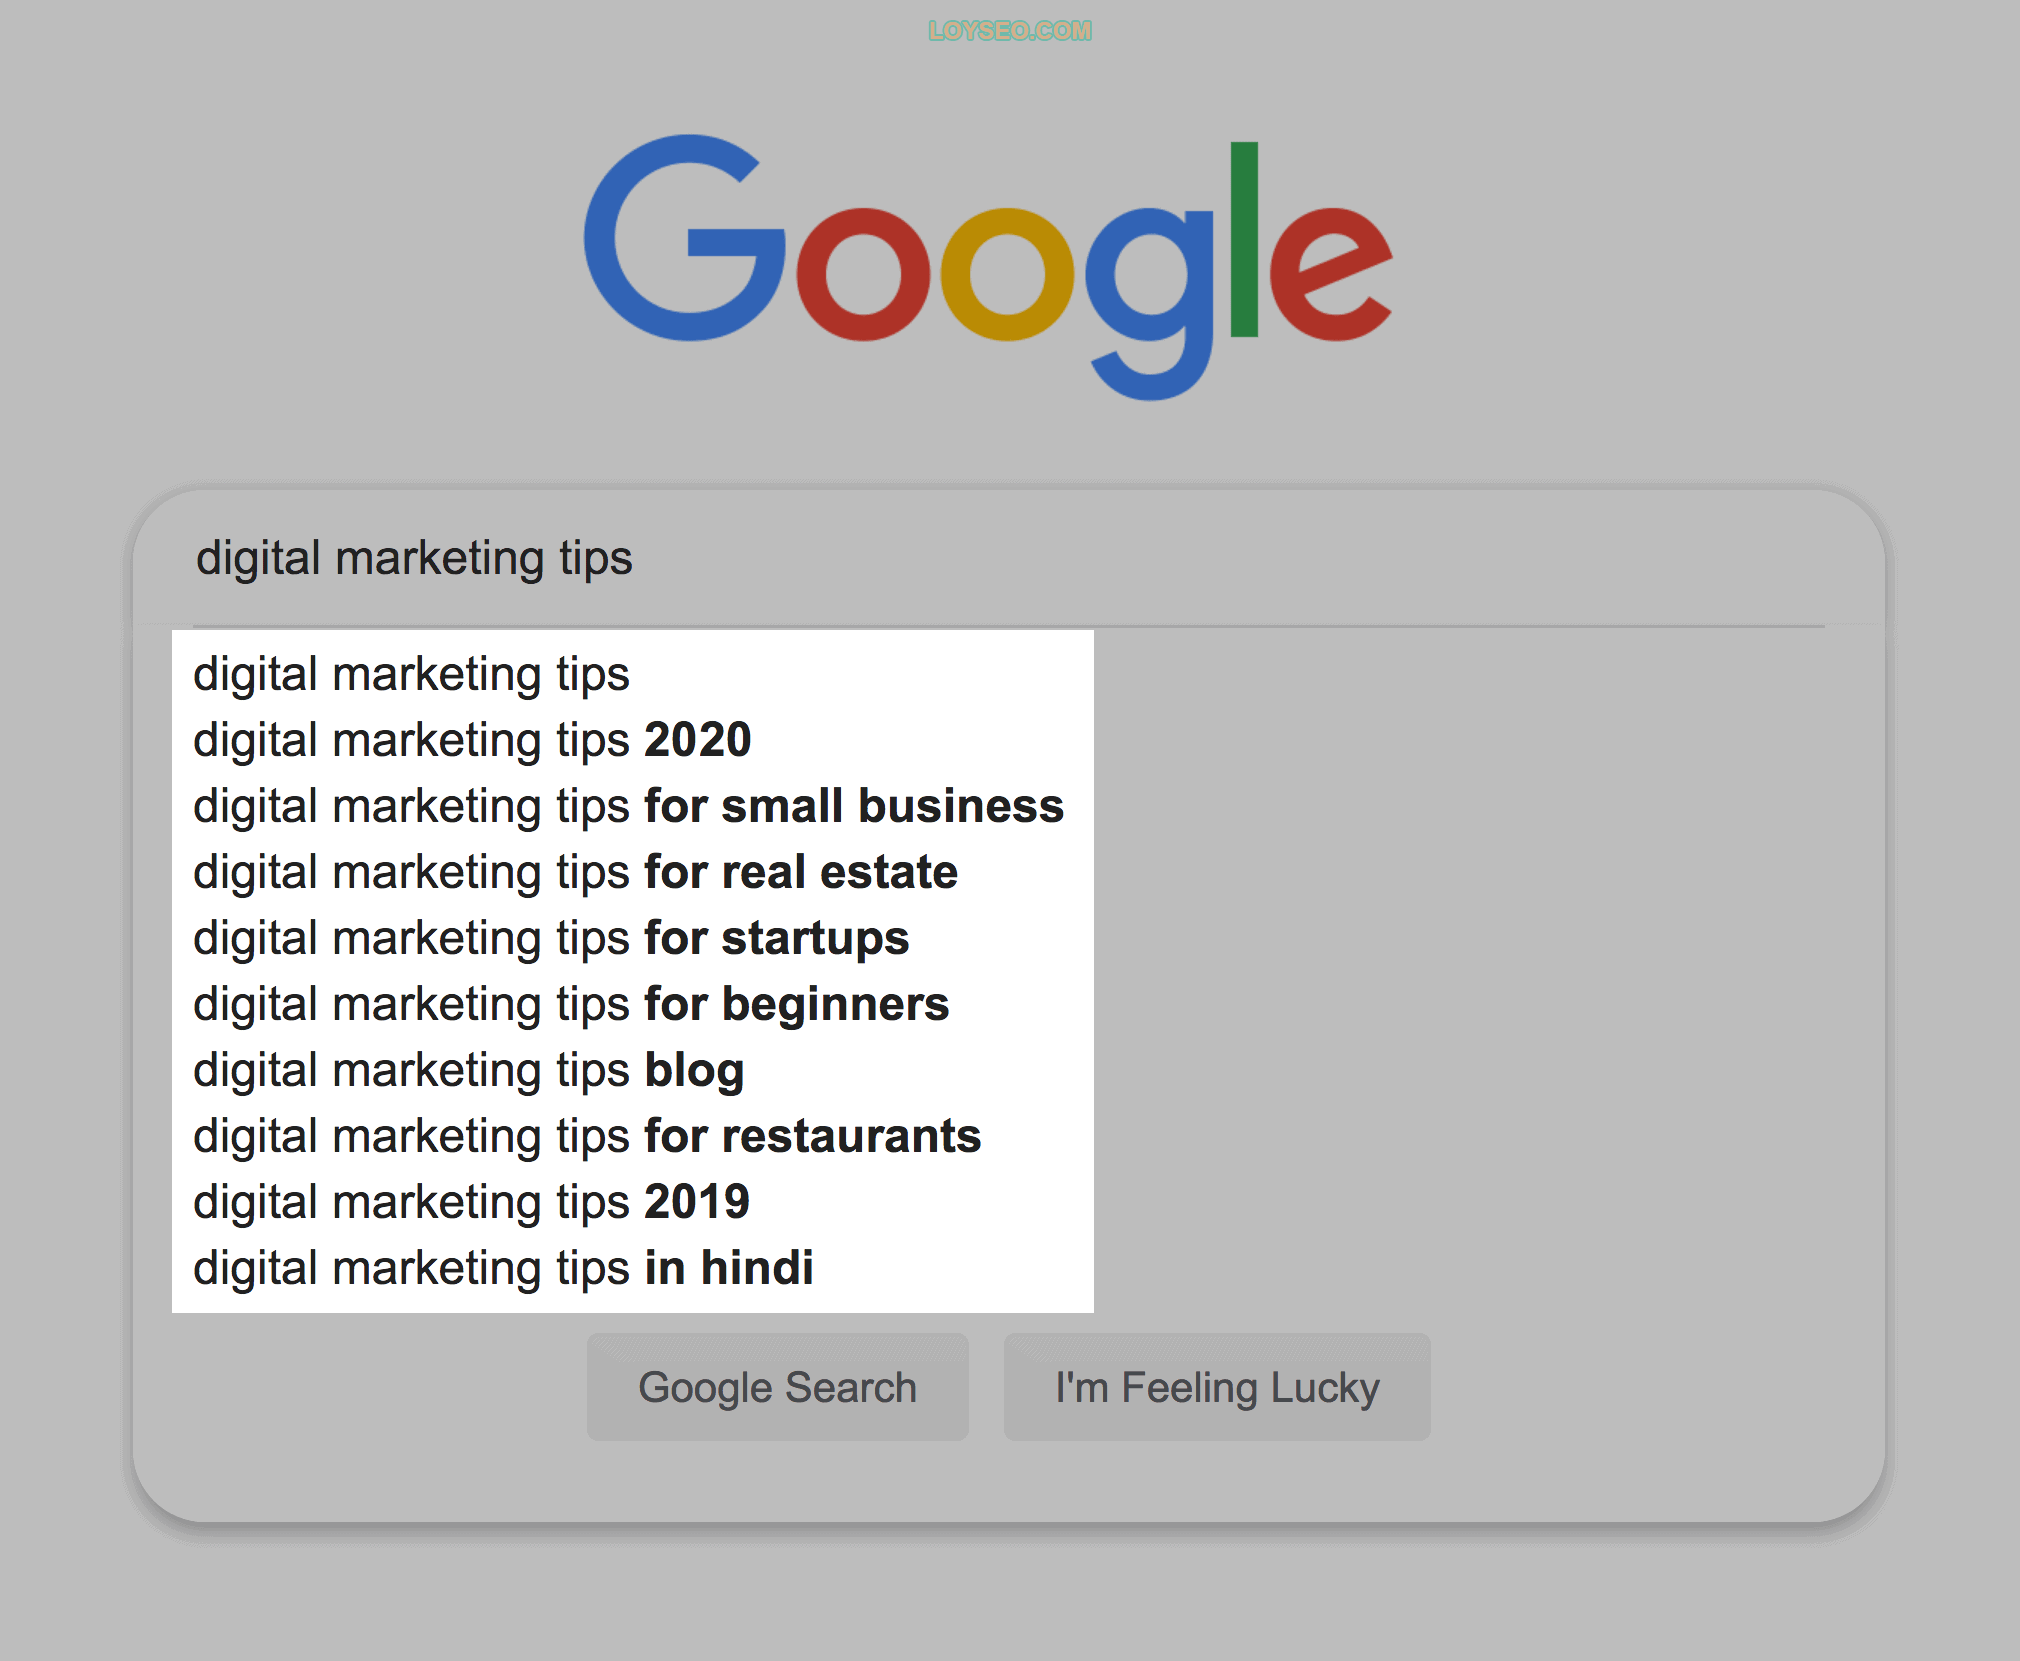 Google Suggest – Digital Marketing Tips